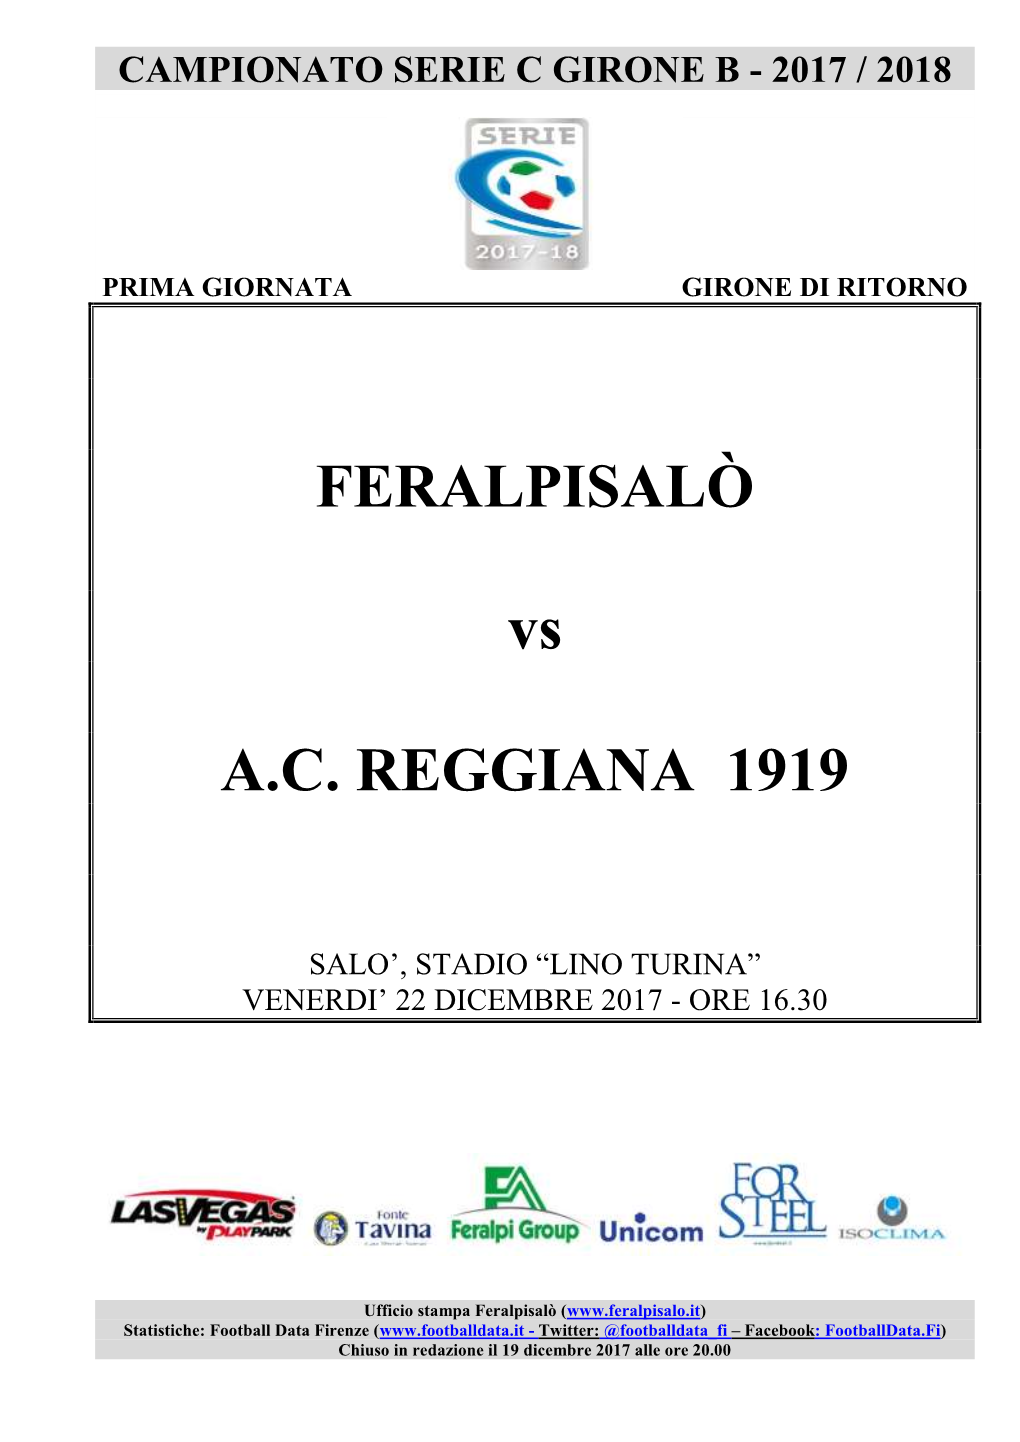 FERALPISALÒ Vs A.C. REGGIANA 1919